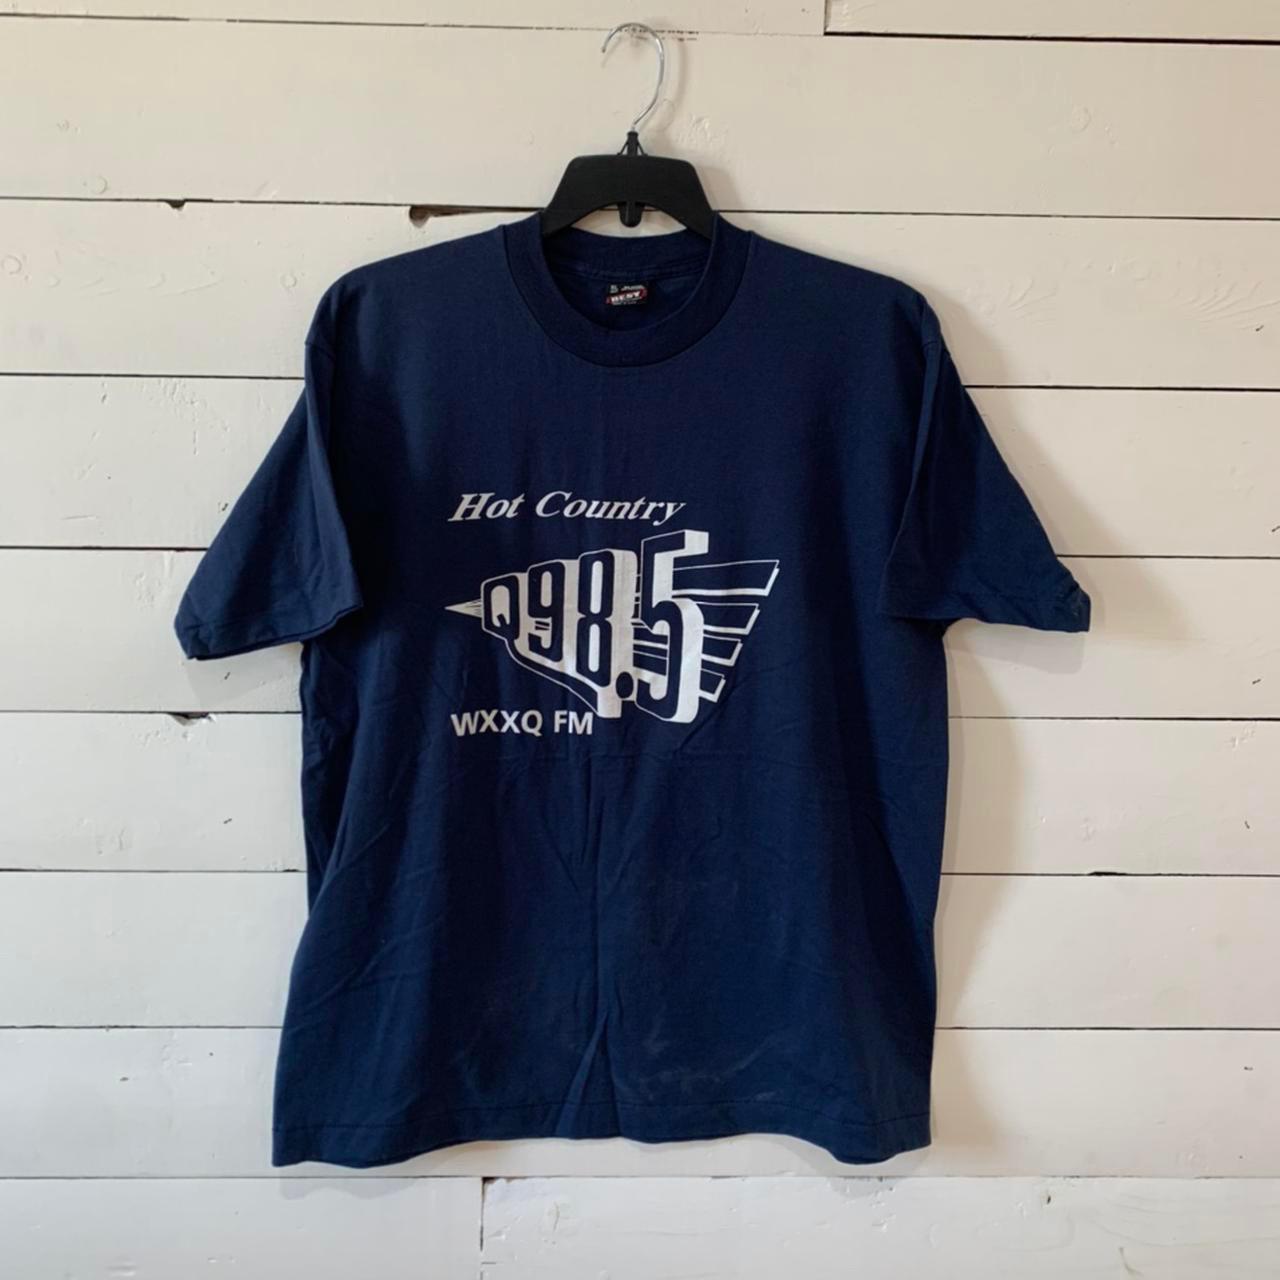 American Vintage Men's T-Shirt - Blue - XL